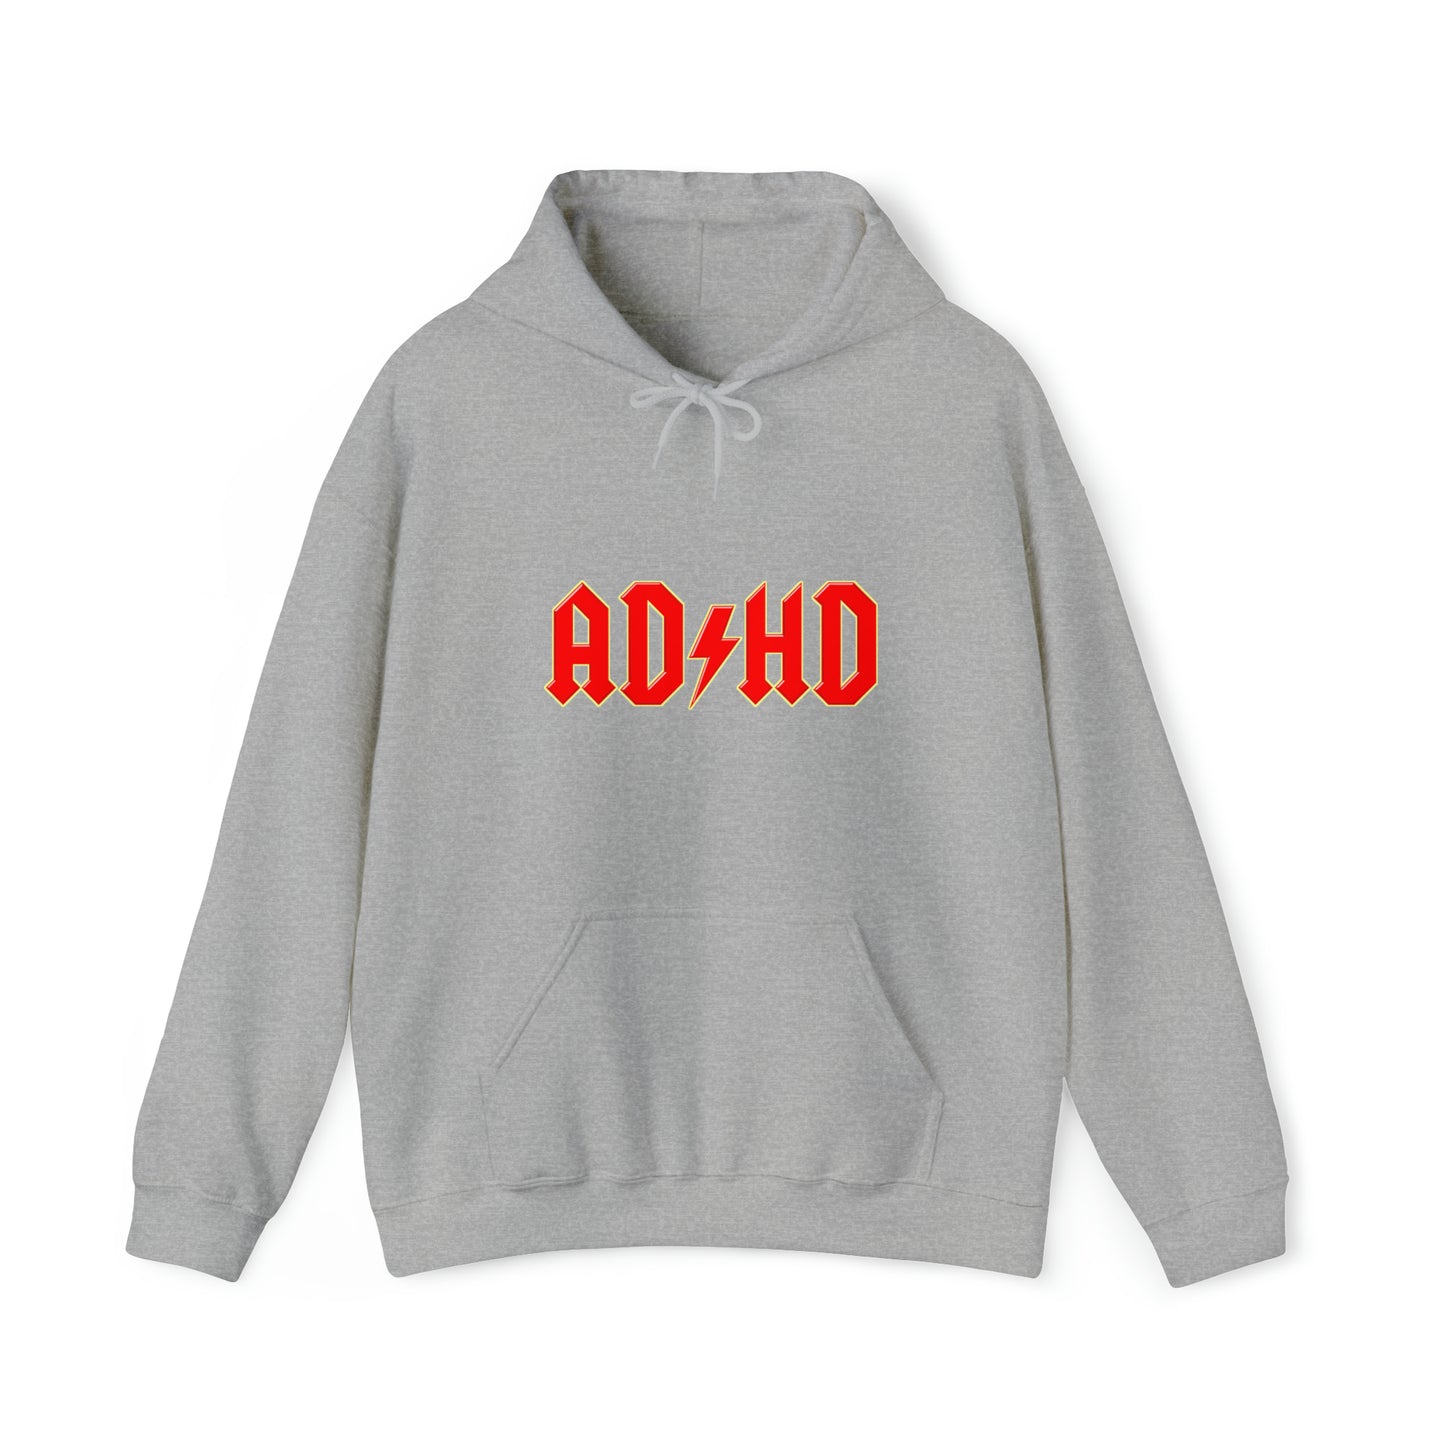 Custom Parody Hooded Sweatshirt, AD-HD design